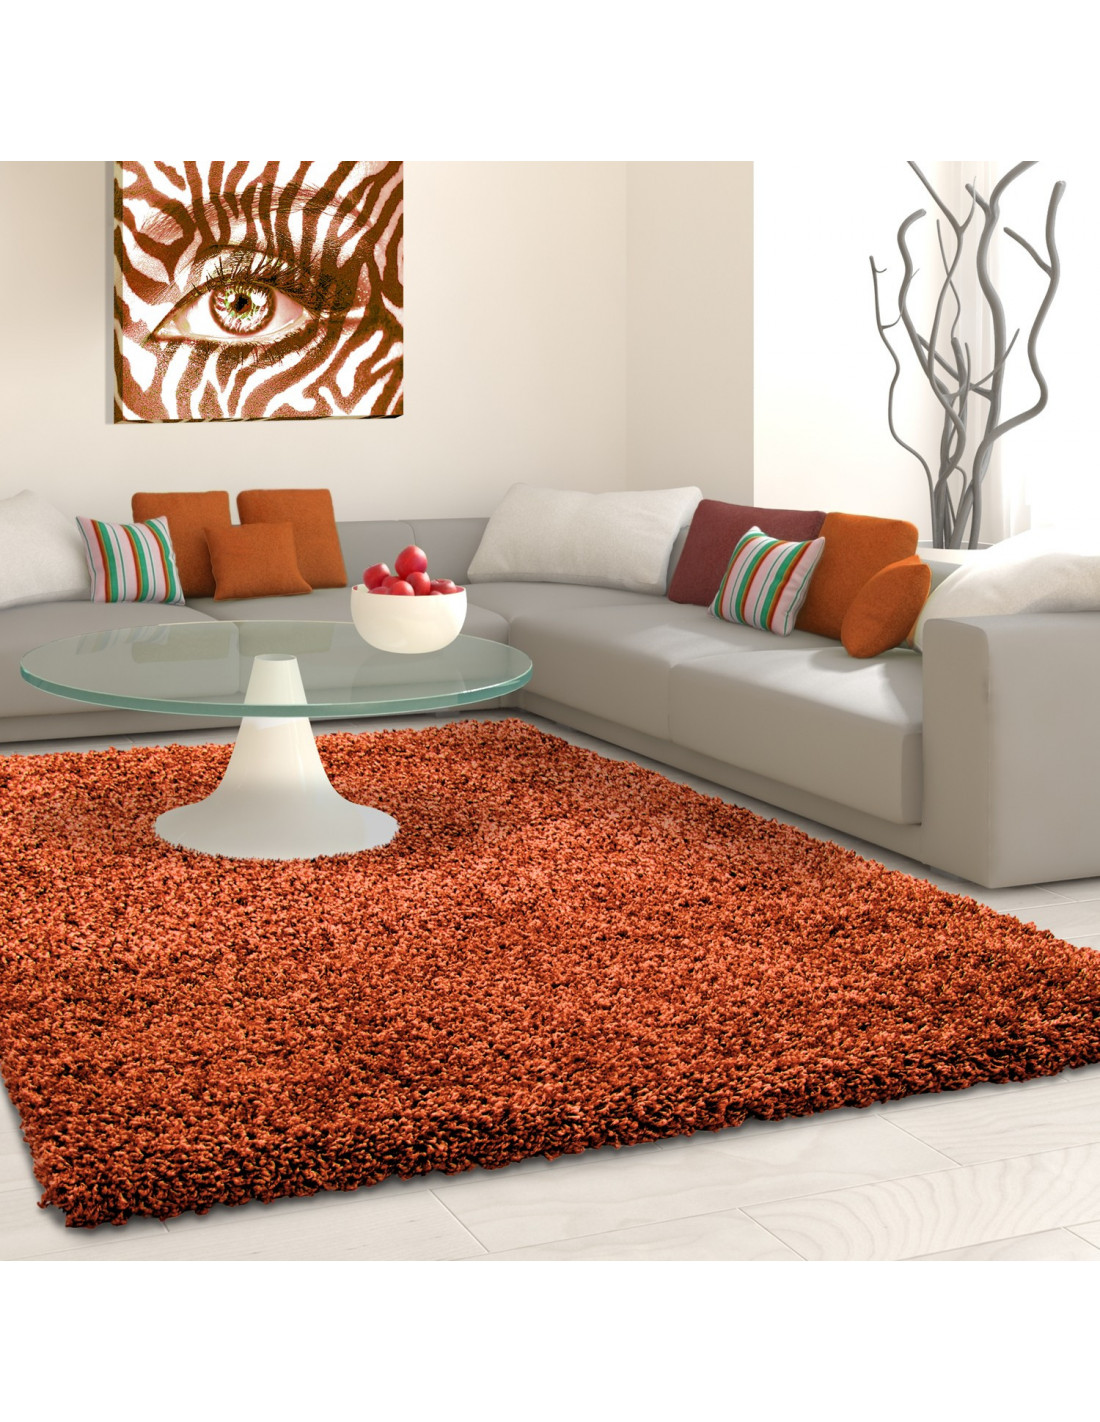 Shaggy carpet, pile height 3cm, plain color Terra